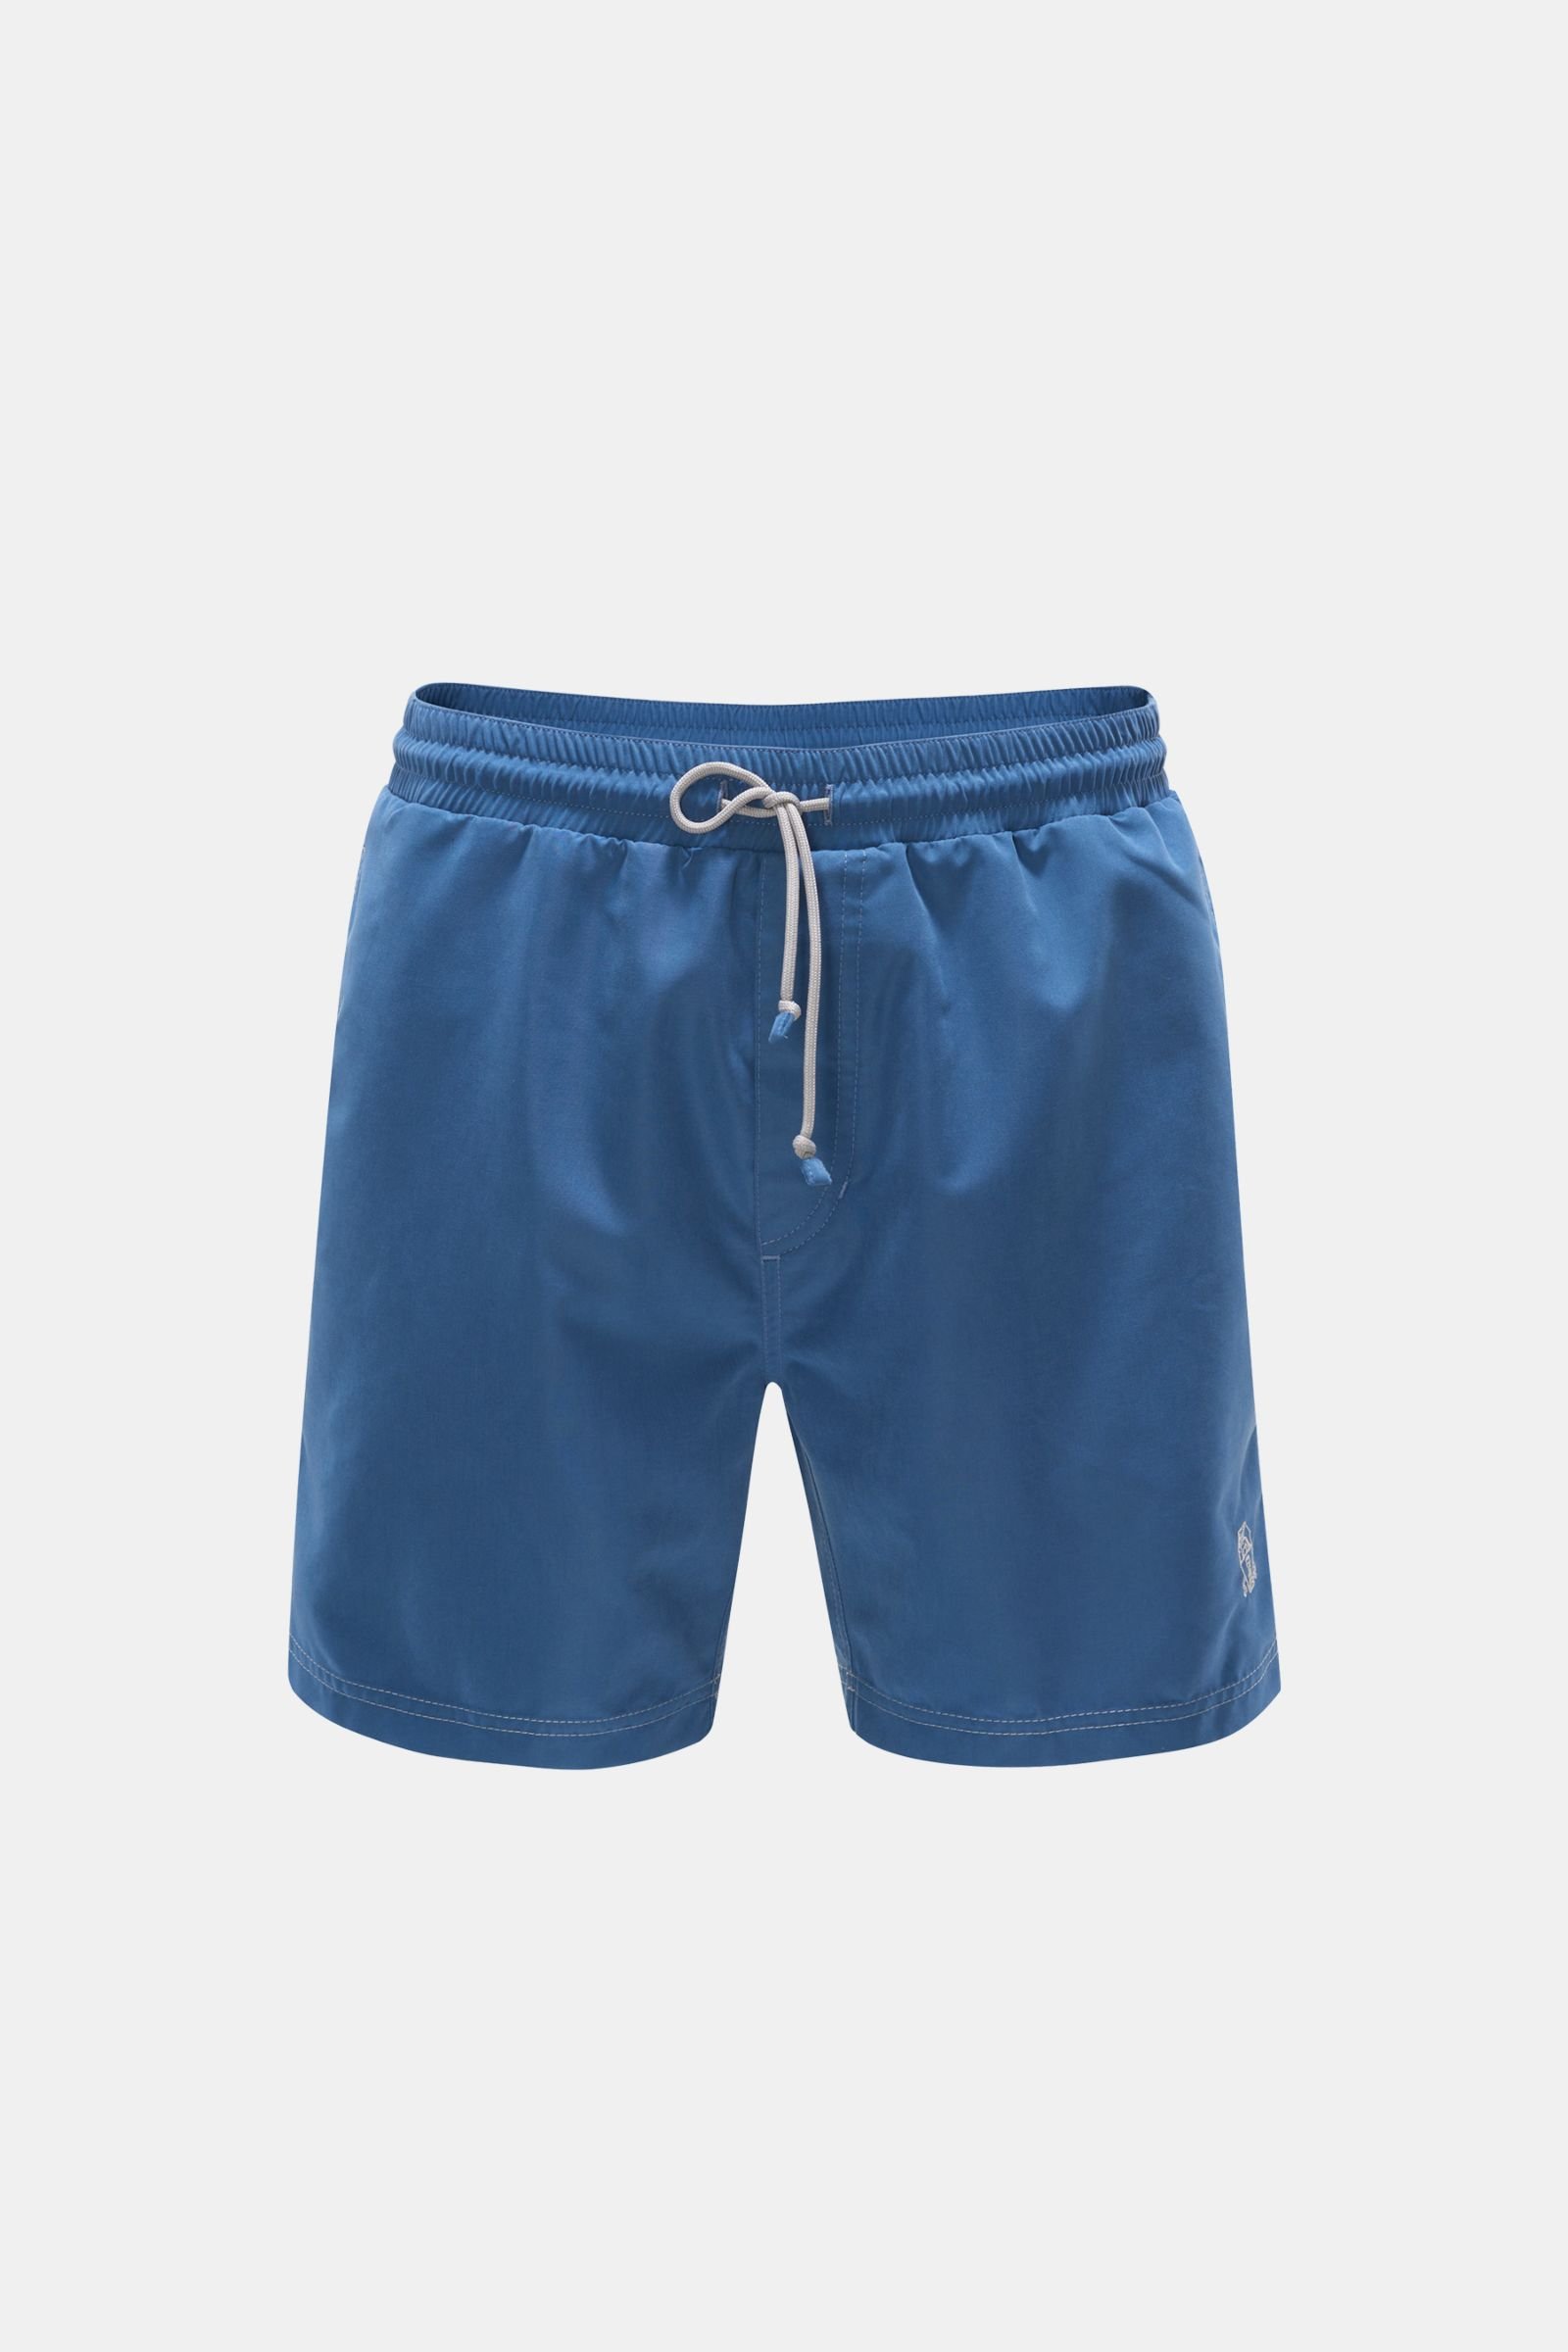 Swim shorts grey-blue